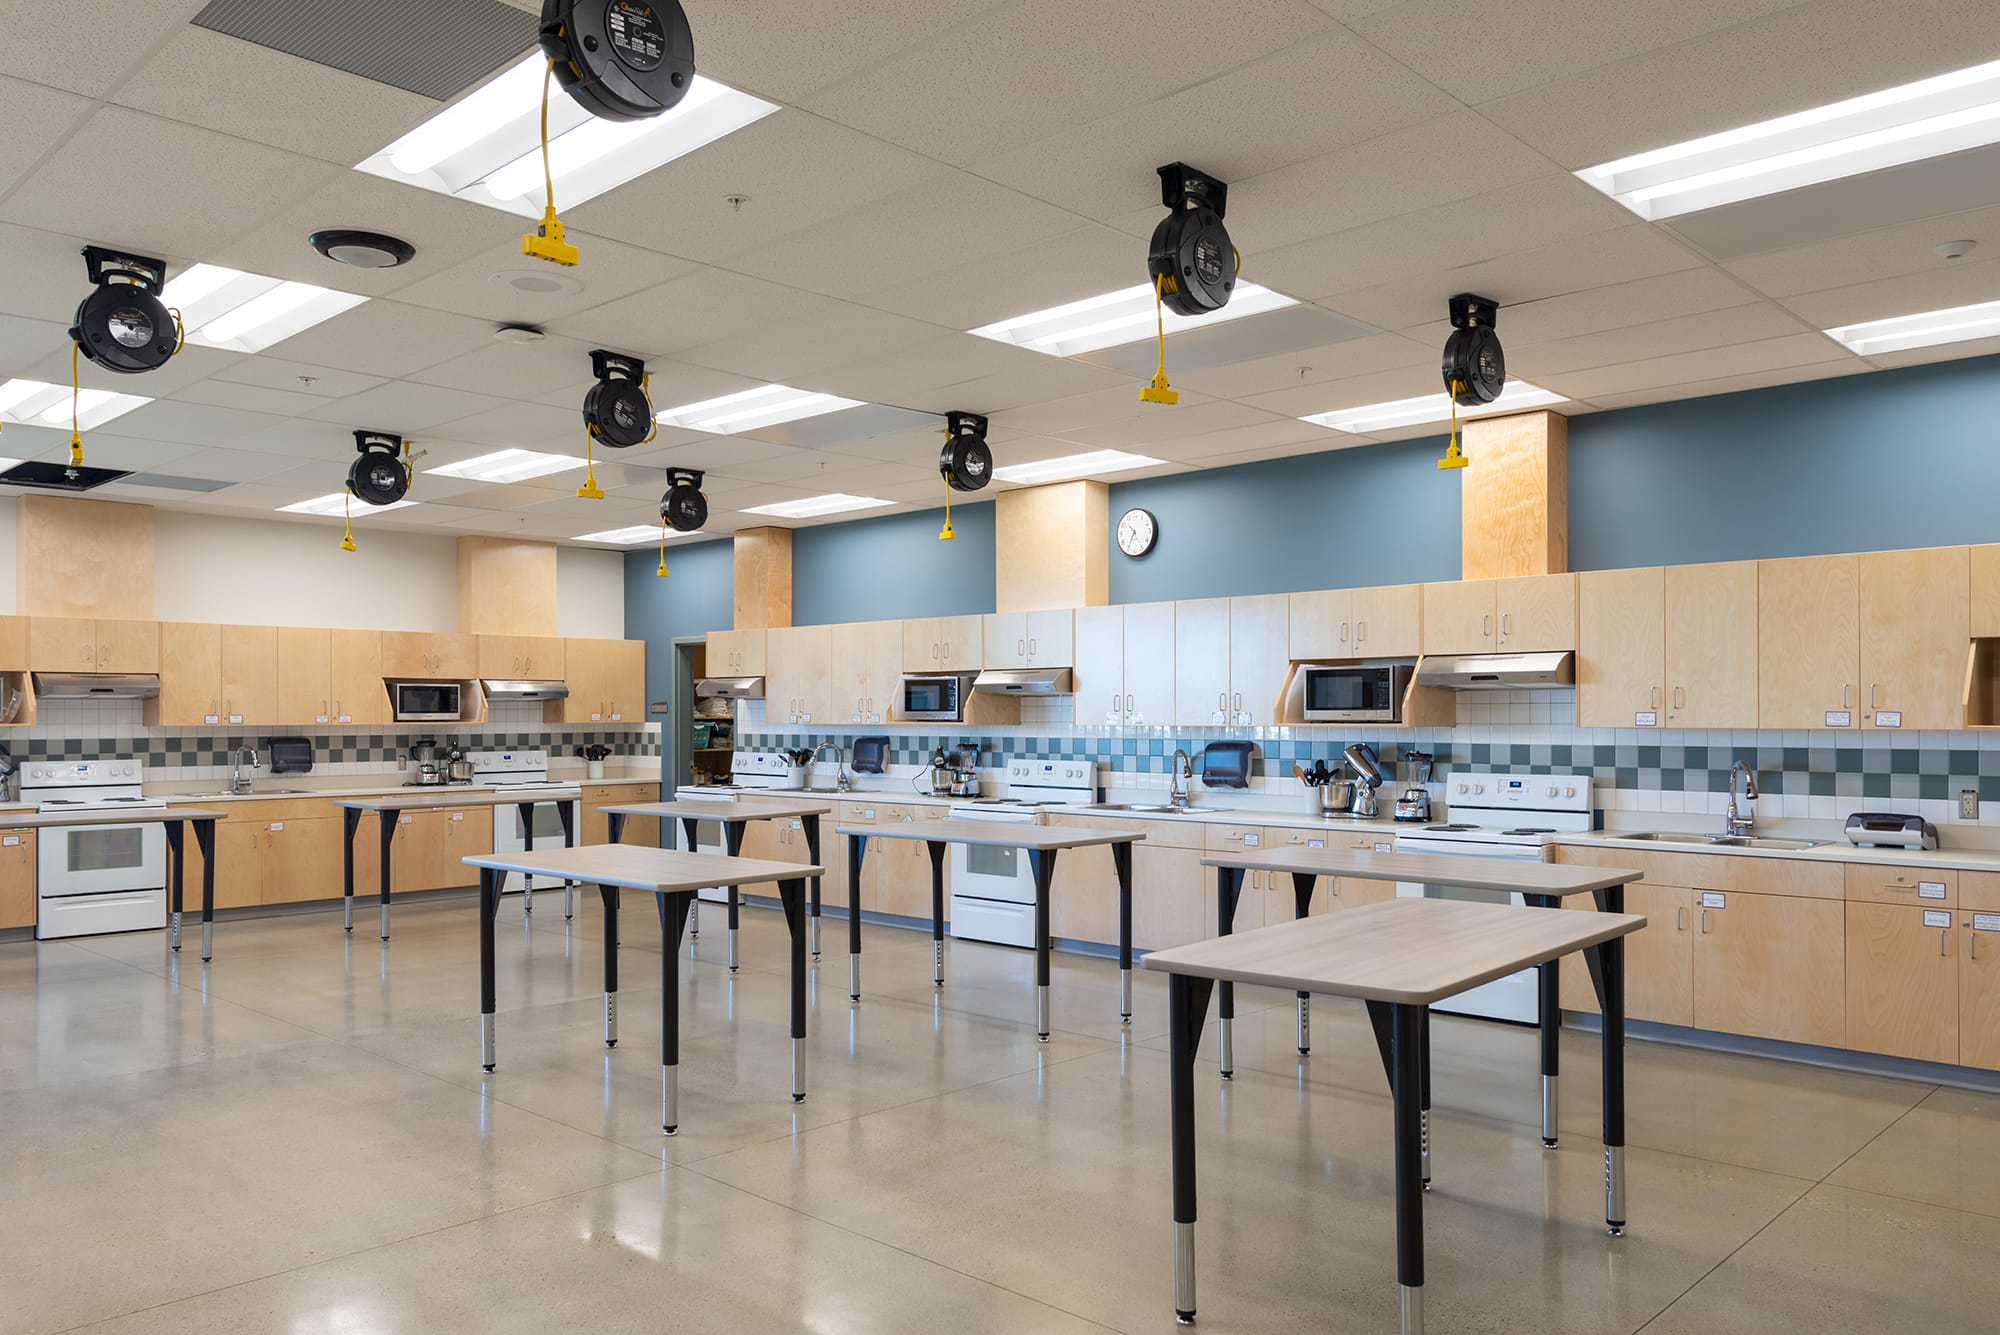 Corpus-Christi-Catholic-School interior kitchen lab